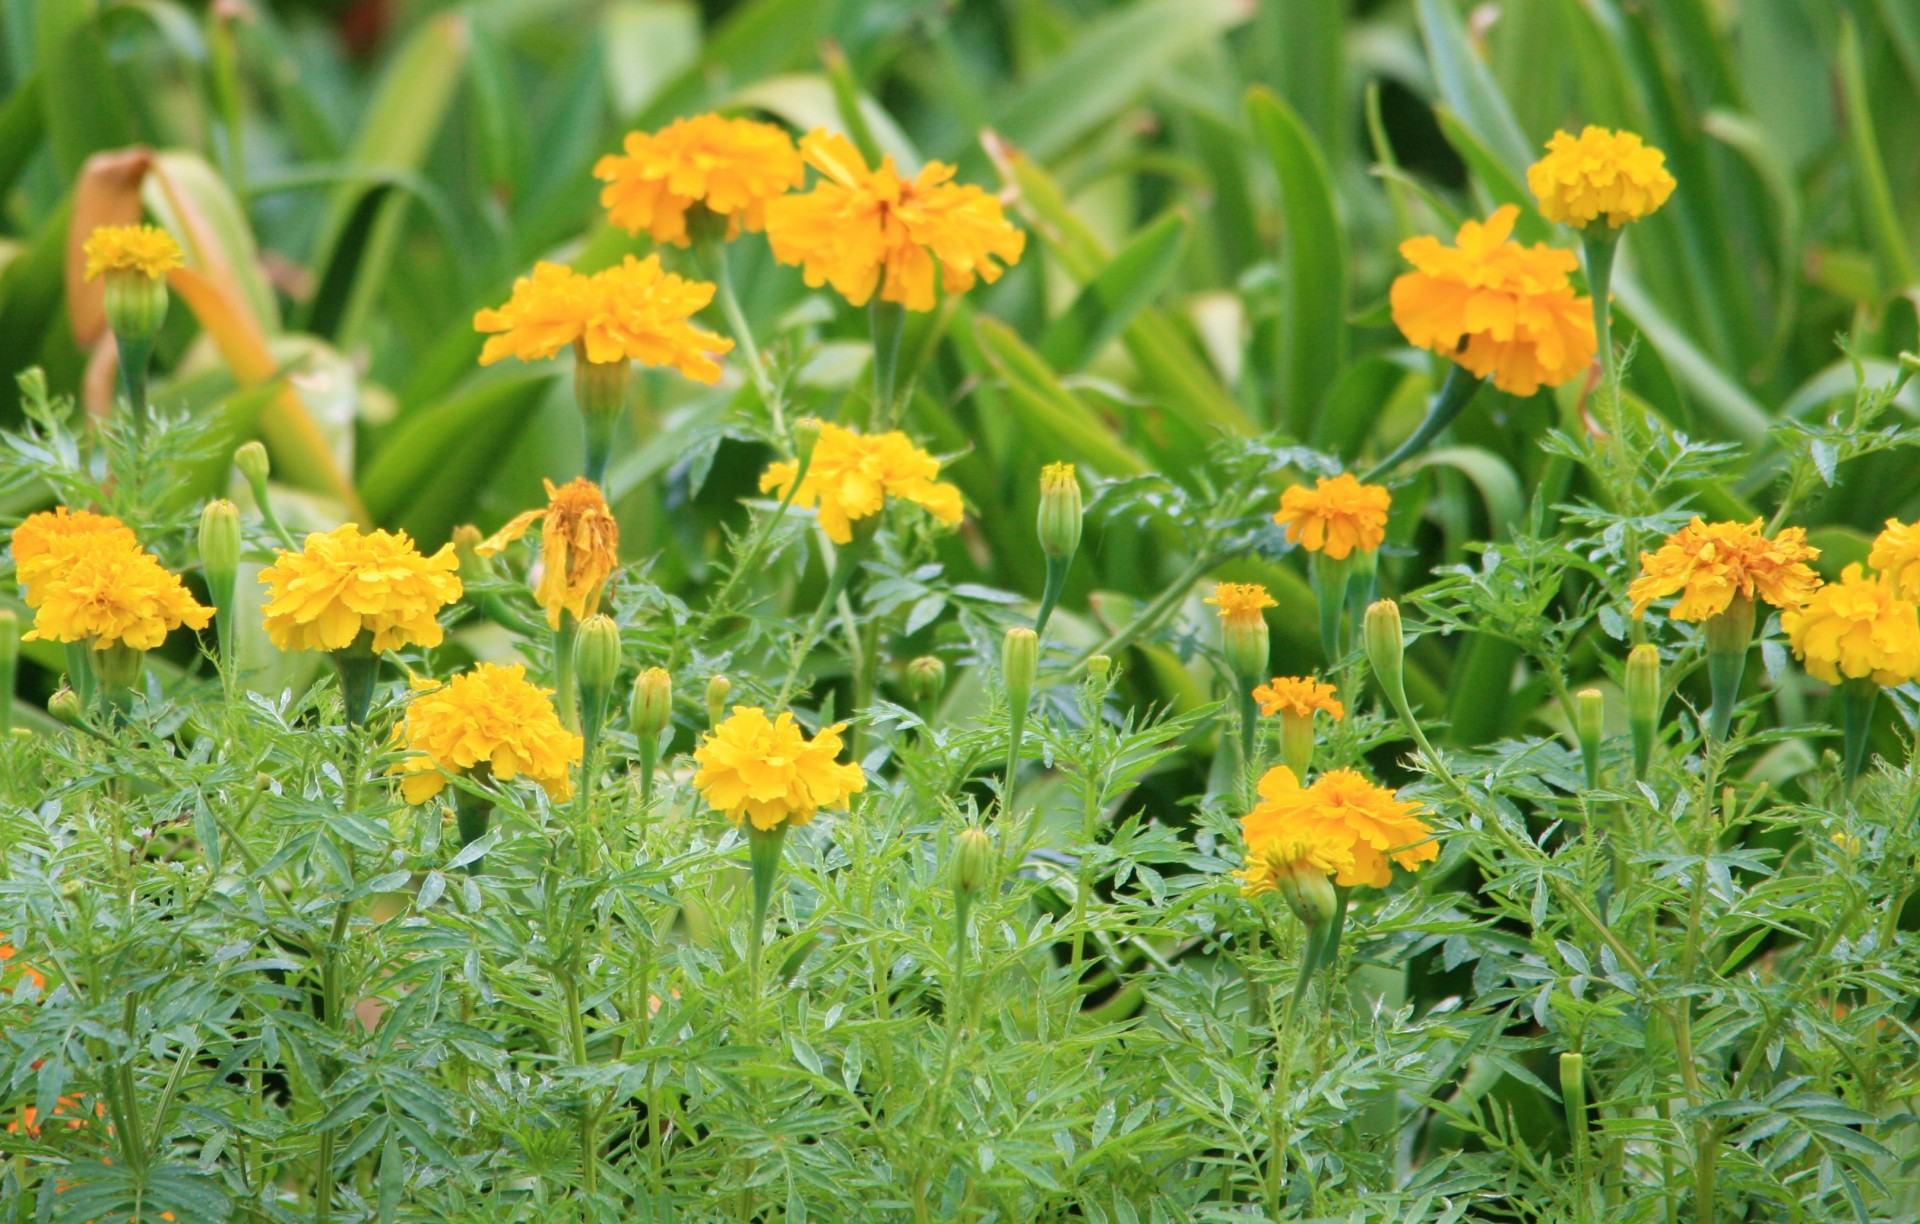 Yellow Flowers, Marigolds